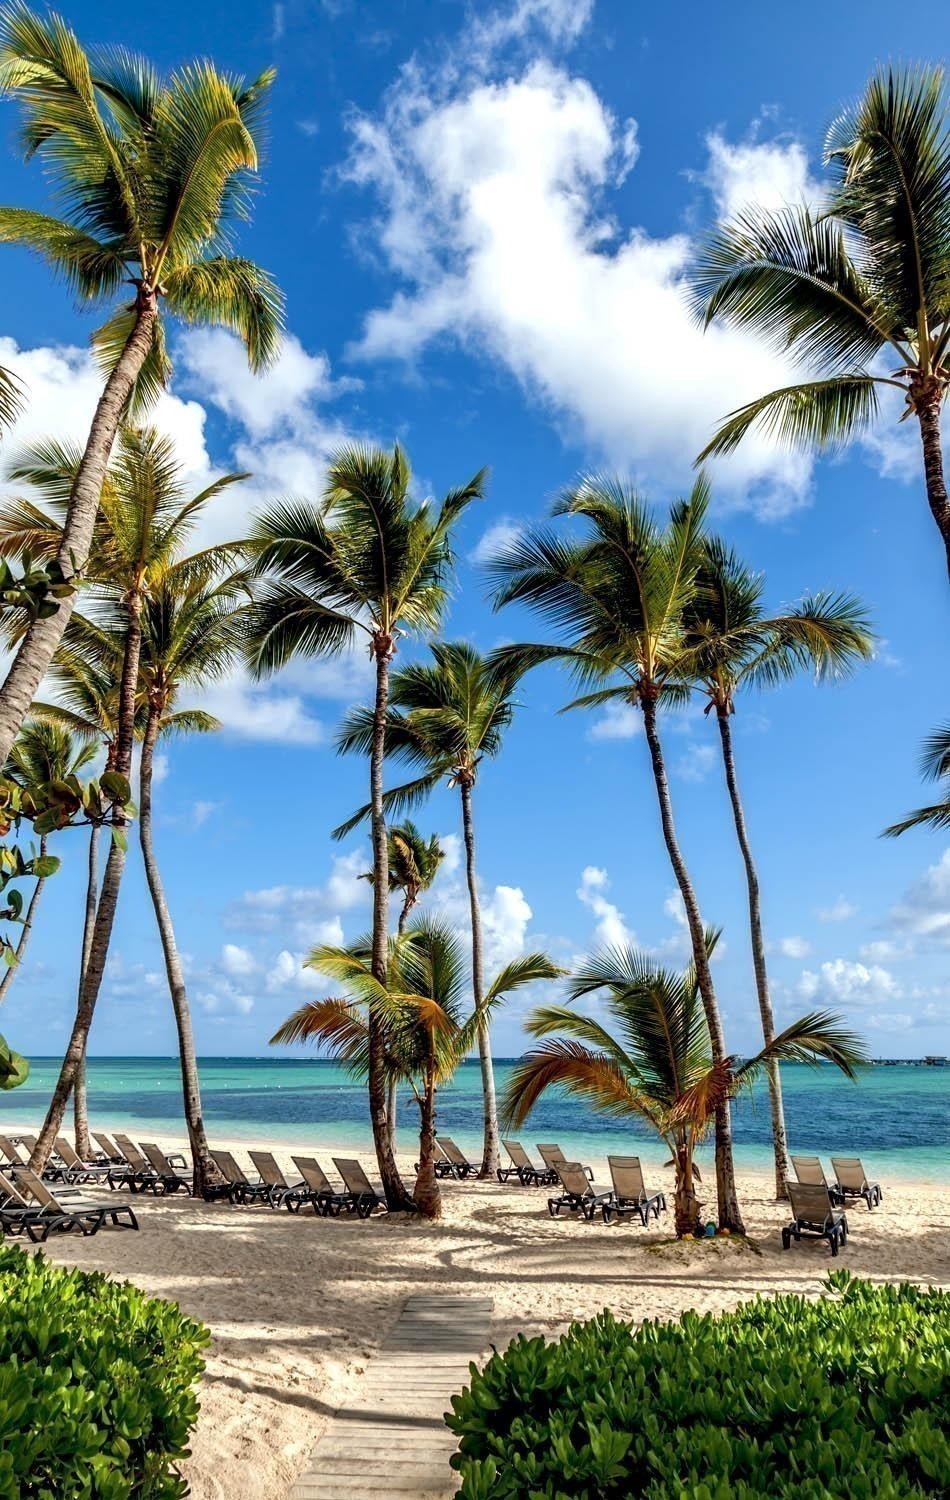 Luxury Resort Beach in Punta Cana | Dominican Republic Free Travel Guide